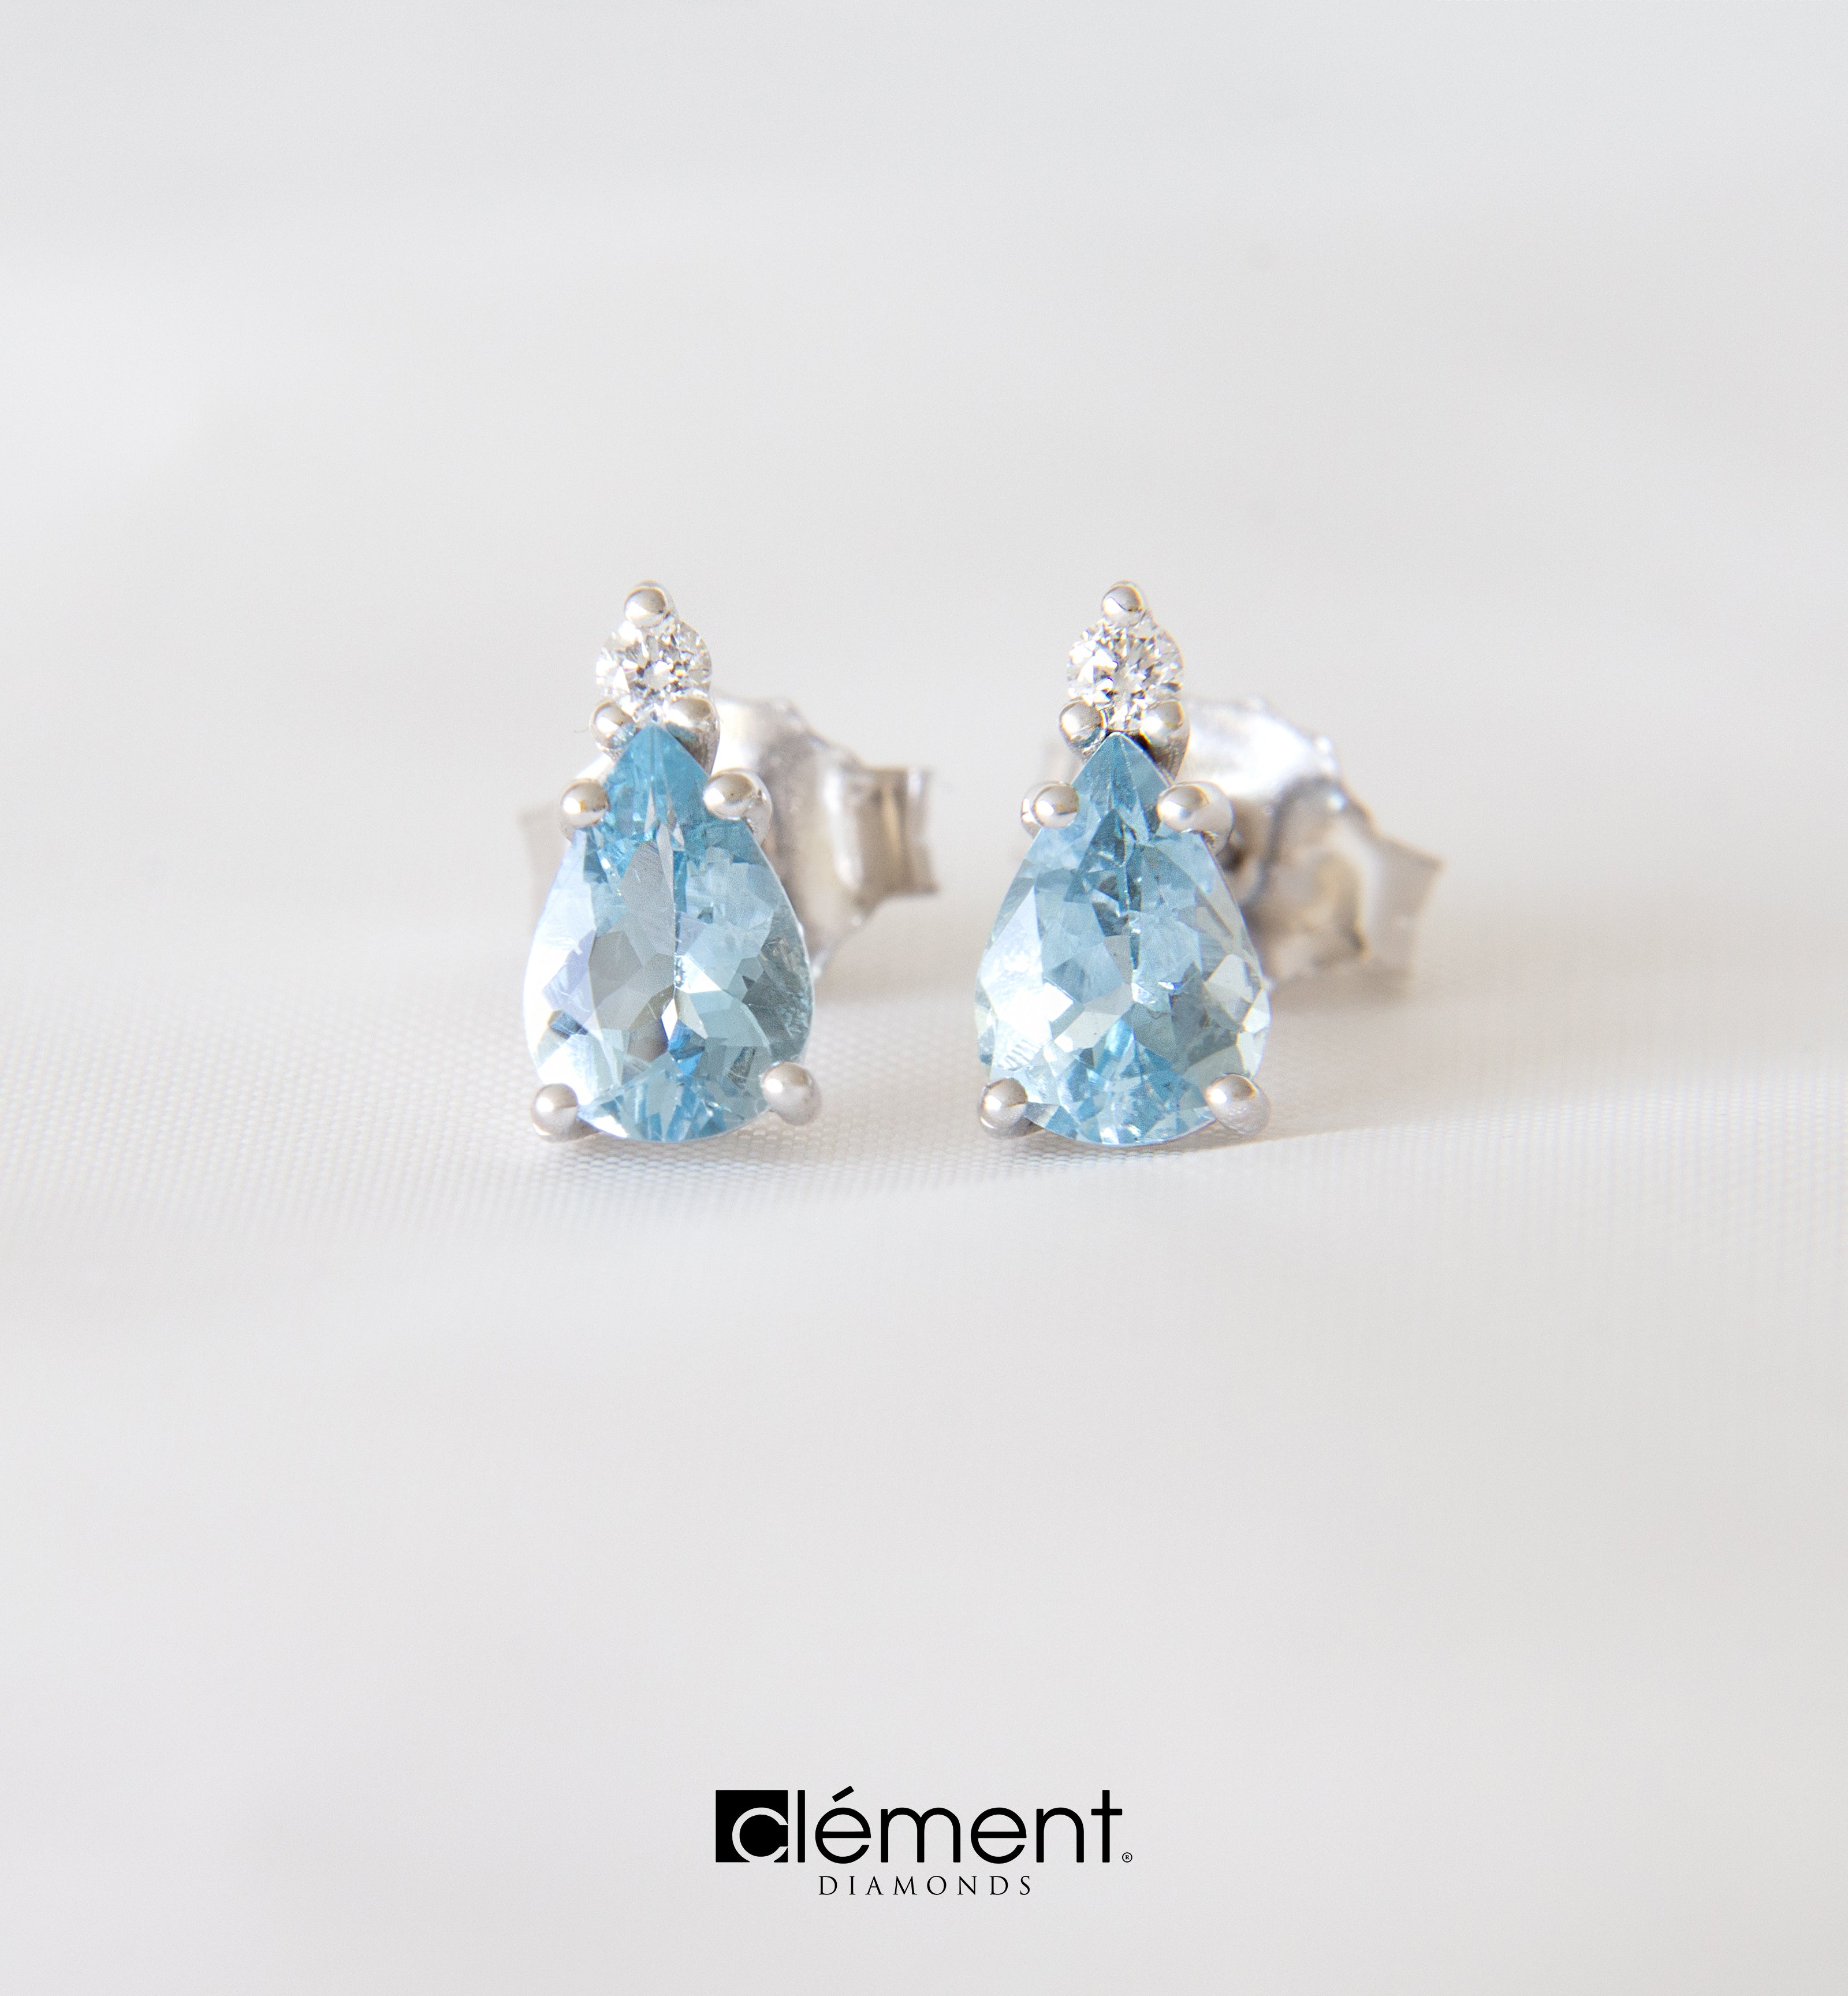 18ct White Gold Diamond and Aquamarine Earrings